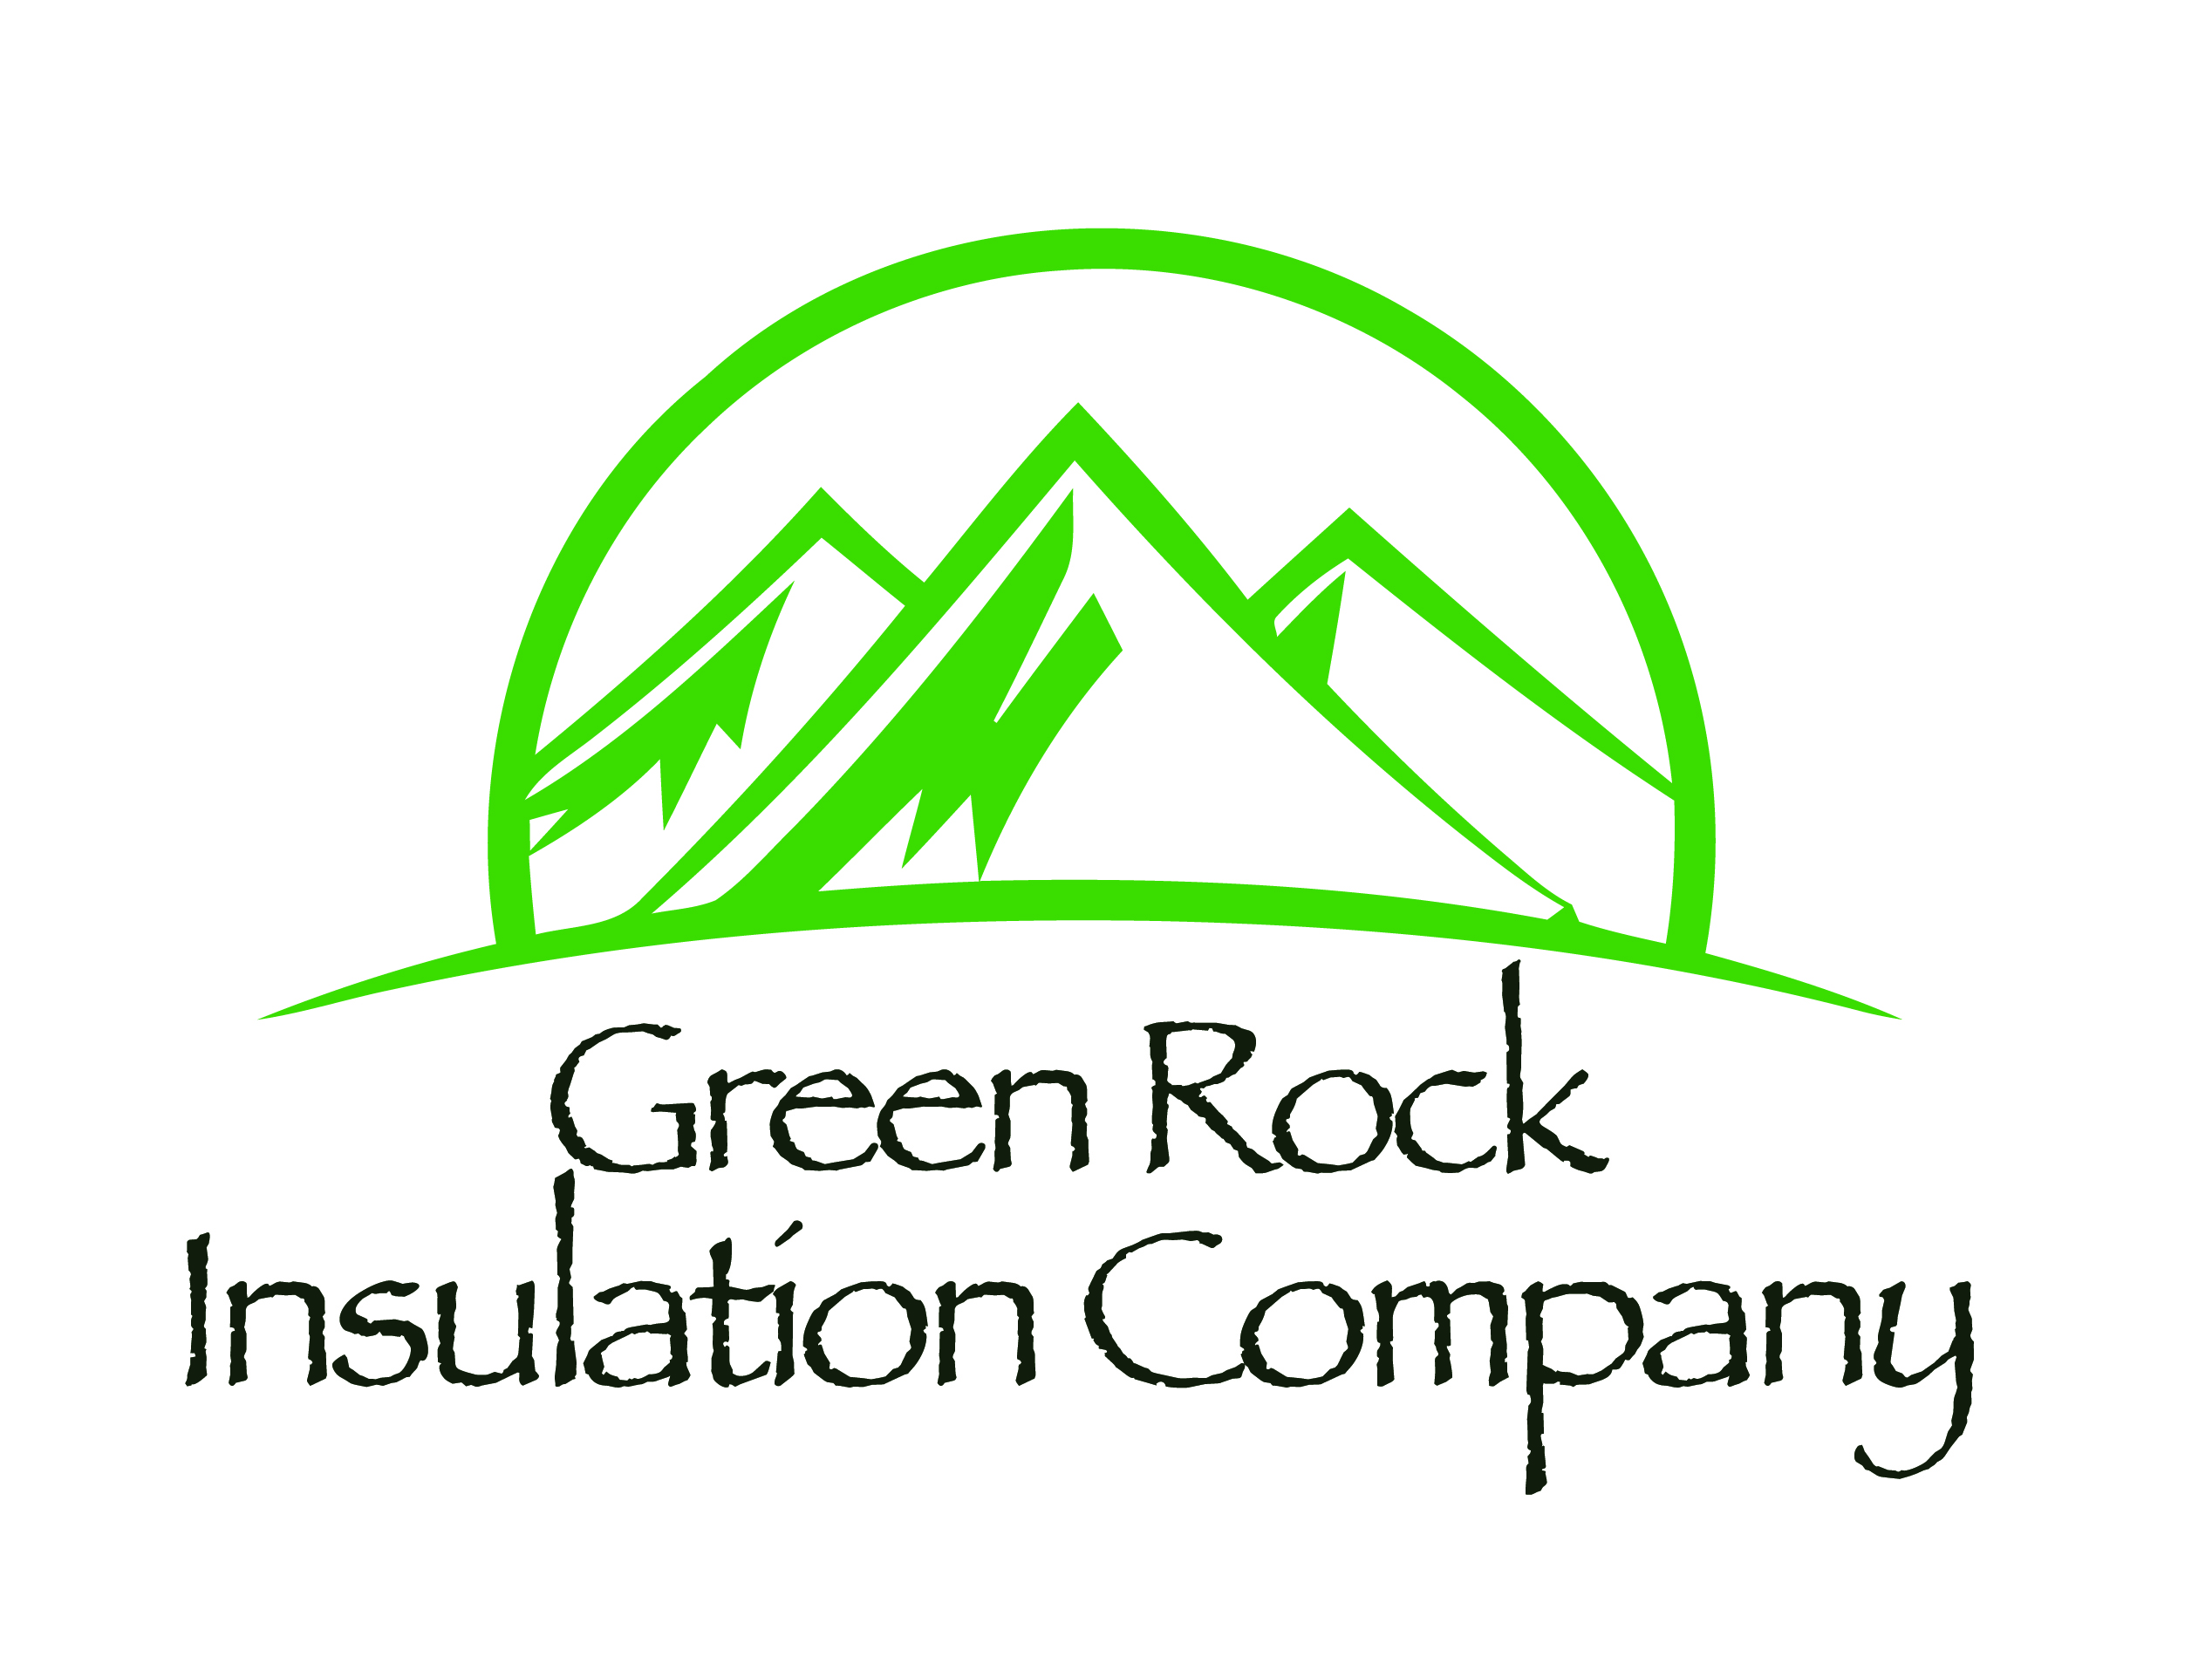 Green Rock Insulation Company